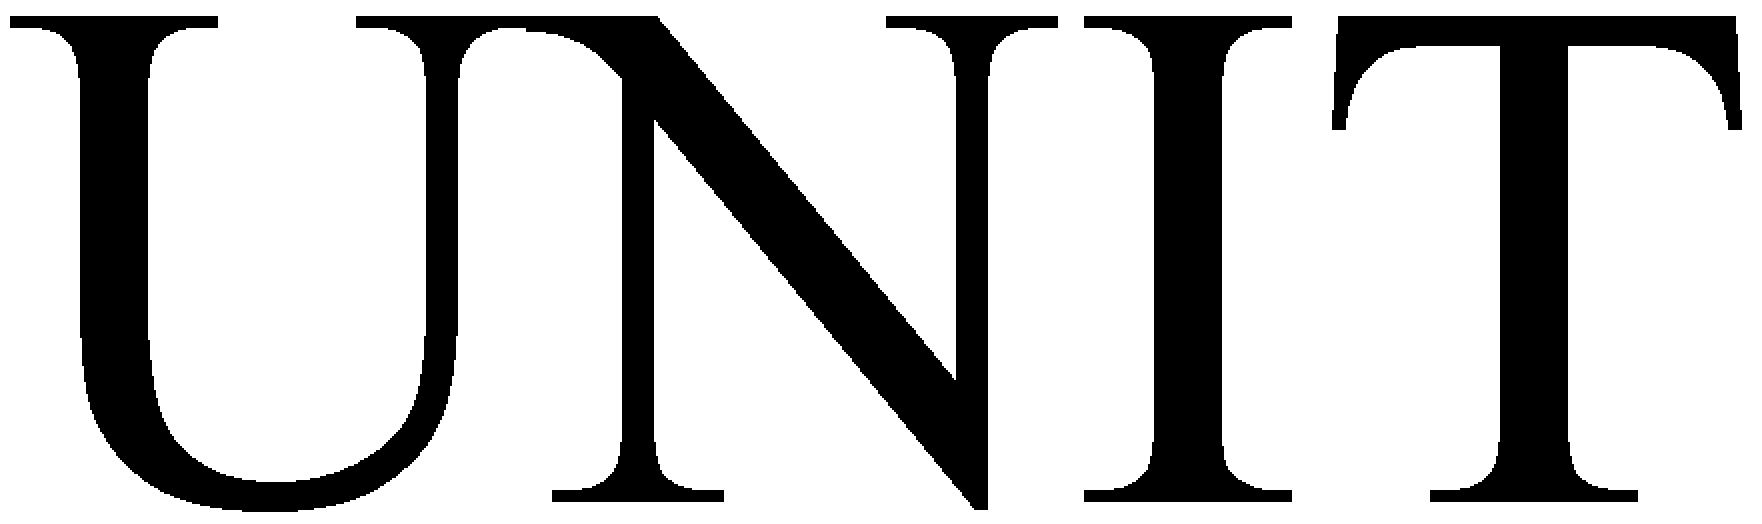 Trademark Logo UNIT